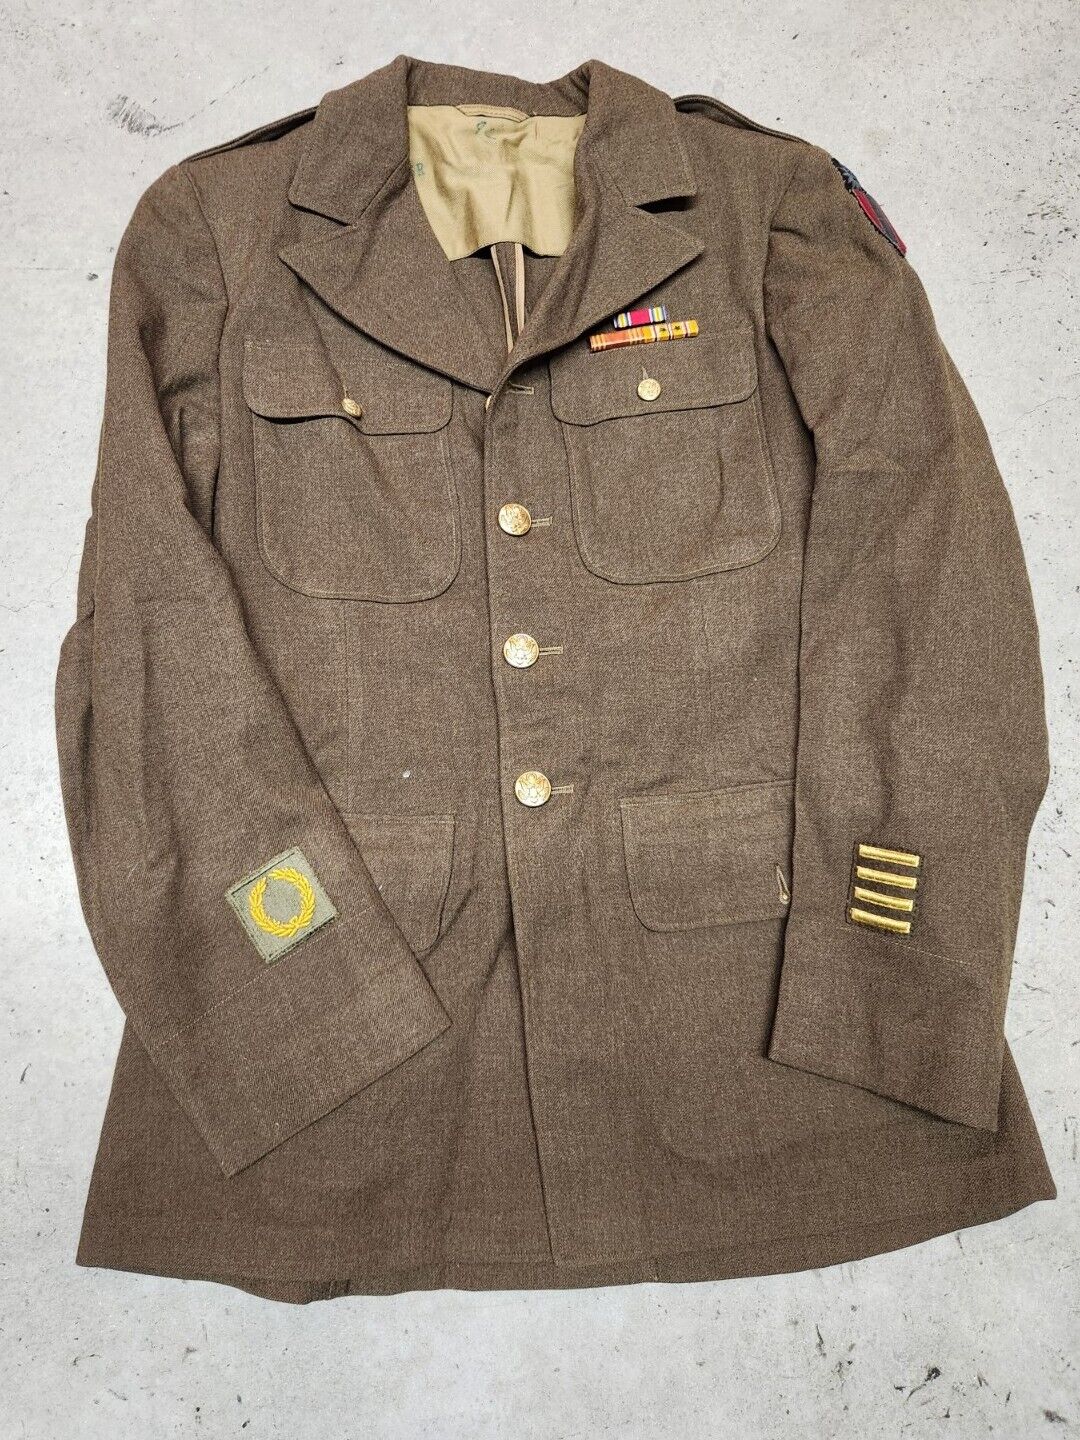 US Army WWII 4 Pocket Wool Jacket China Burma India CBI Theater 36R J*